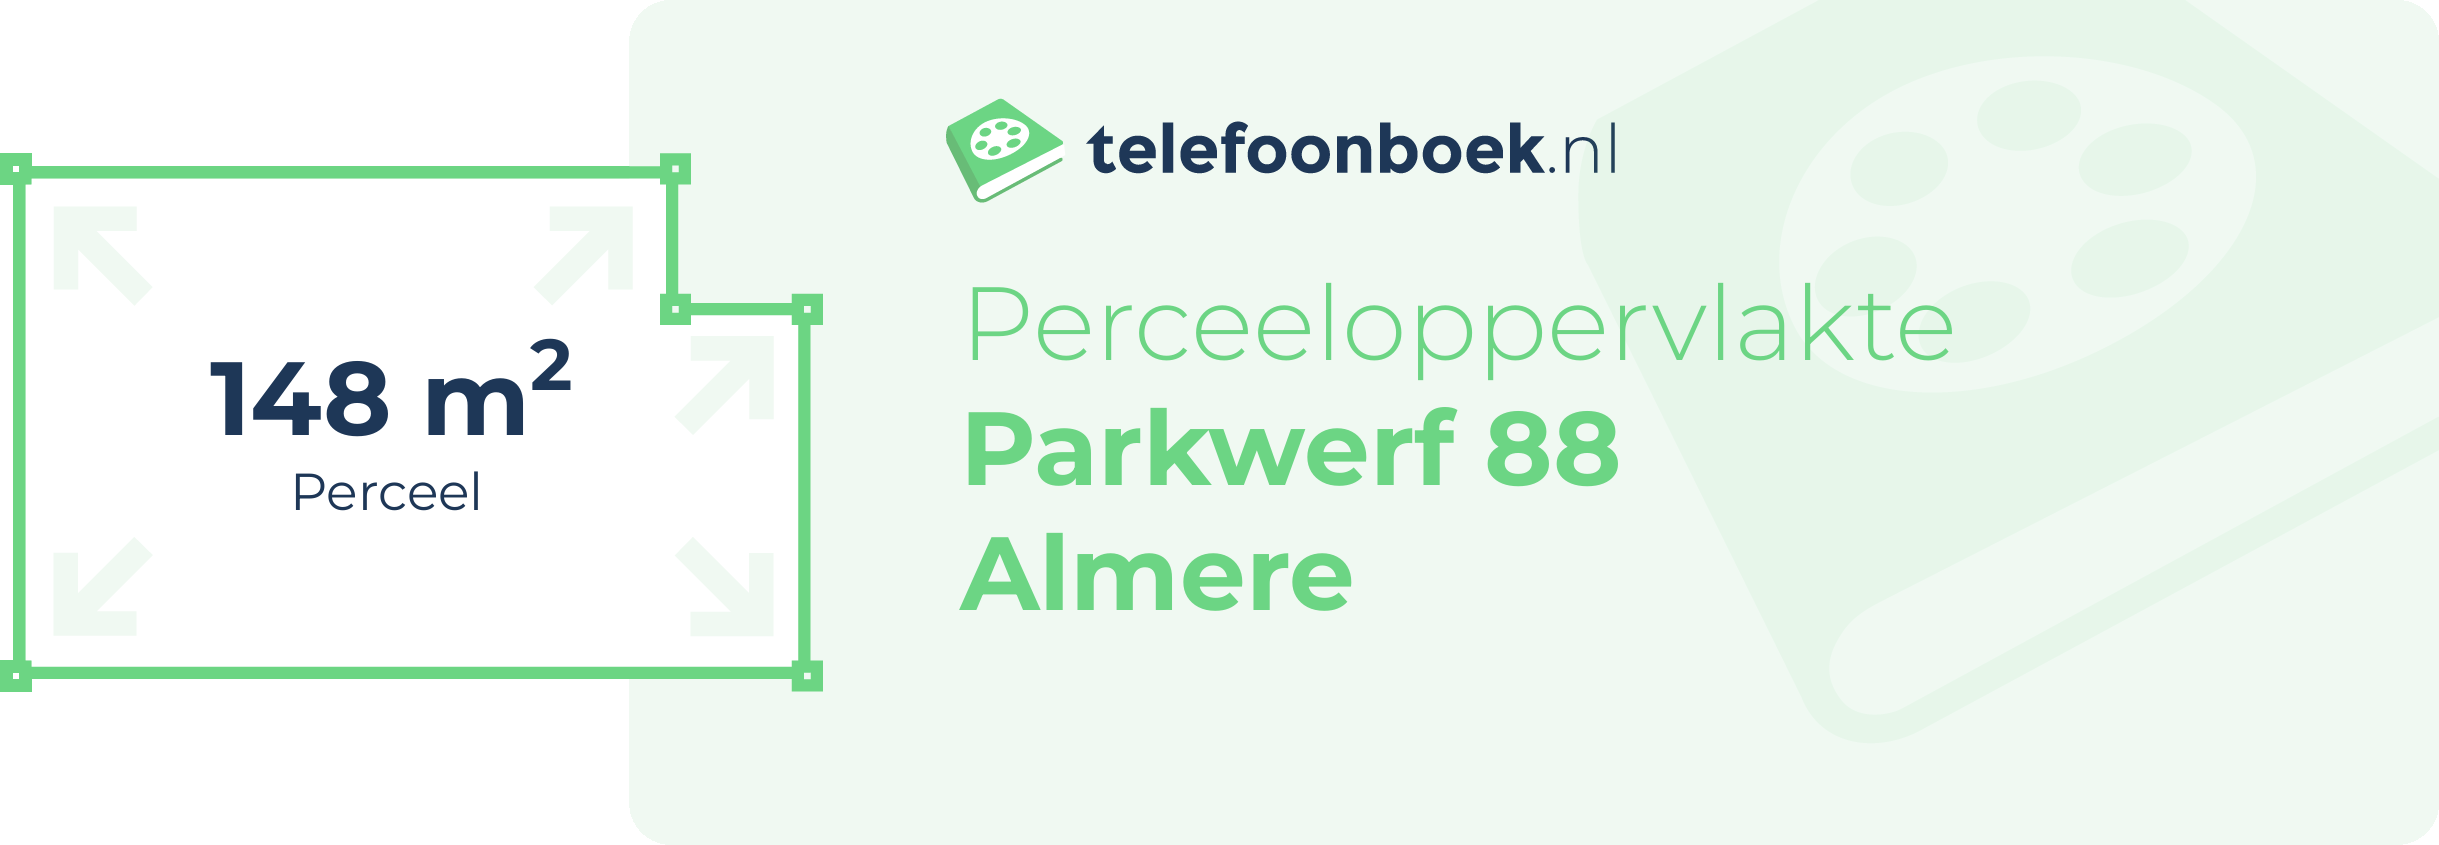 Perceeloppervlakte Parkwerf 88 Almere